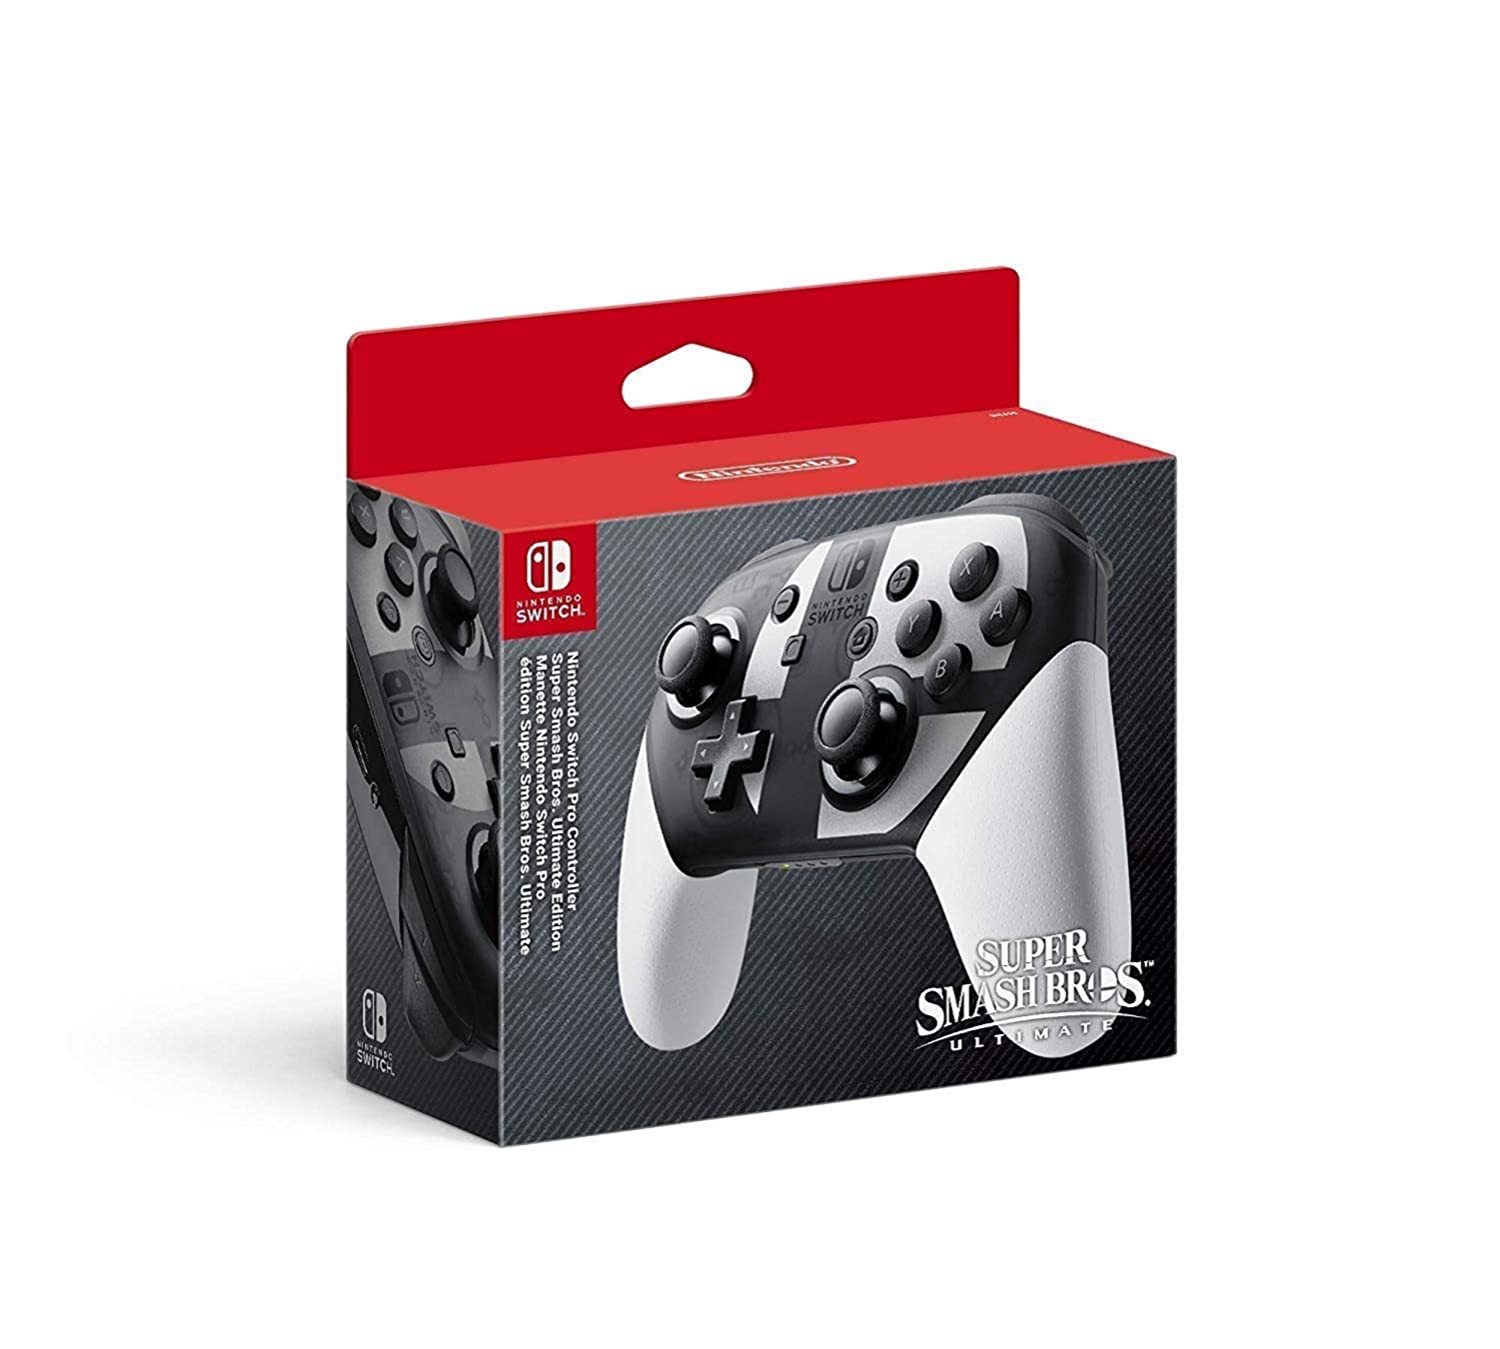 Nintendo Switch Pro Controller Super Smash Bros Edition.